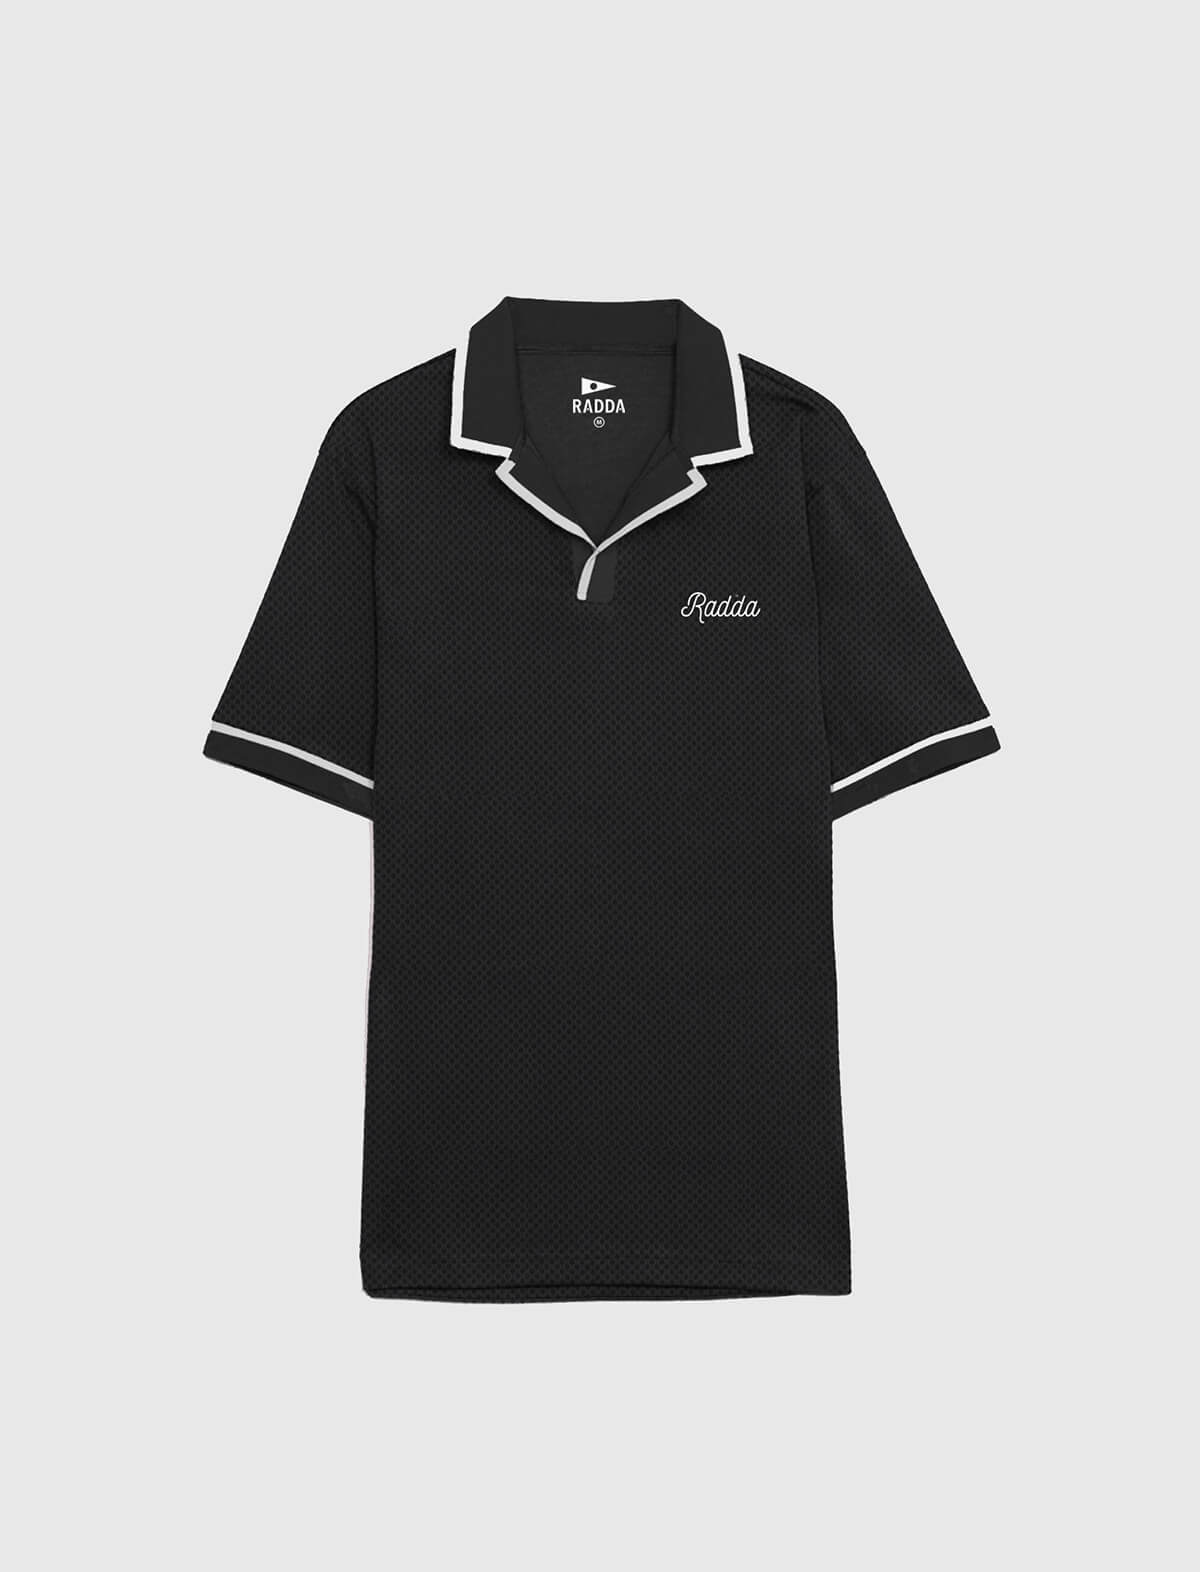 RADDA GOLF Scenario Polo Shirt in Black